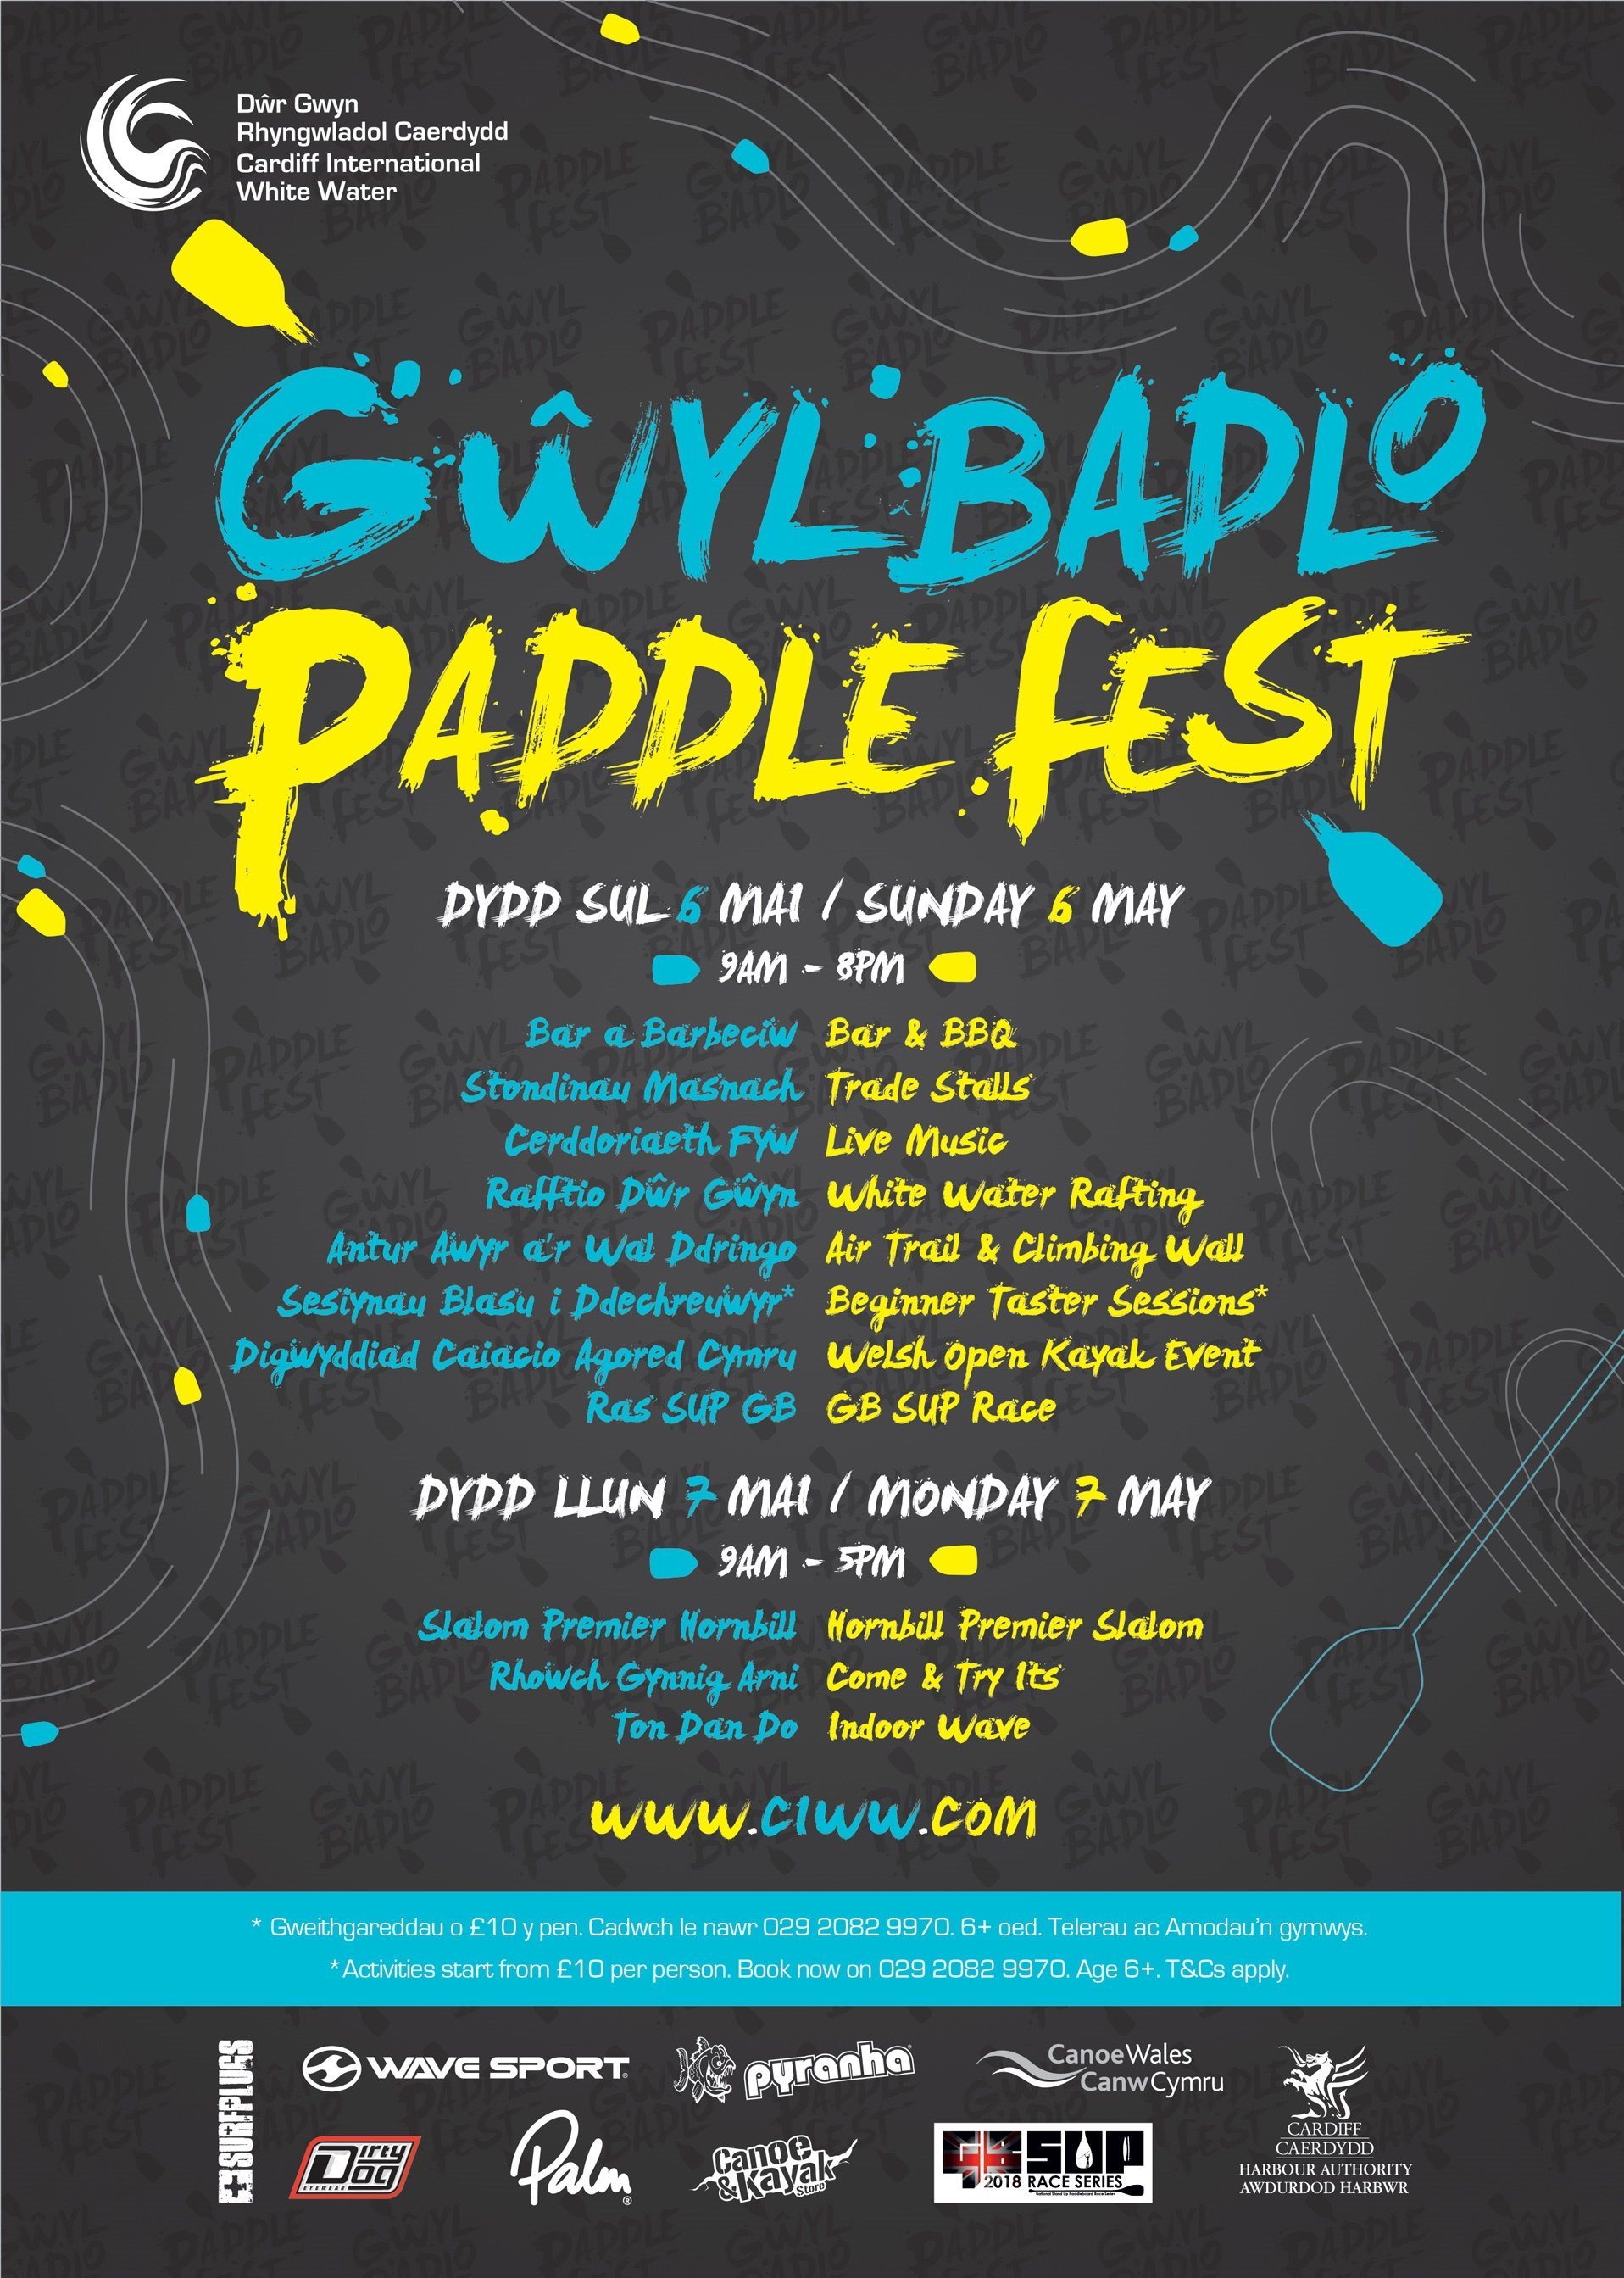 PaddleFest 2018 Poster